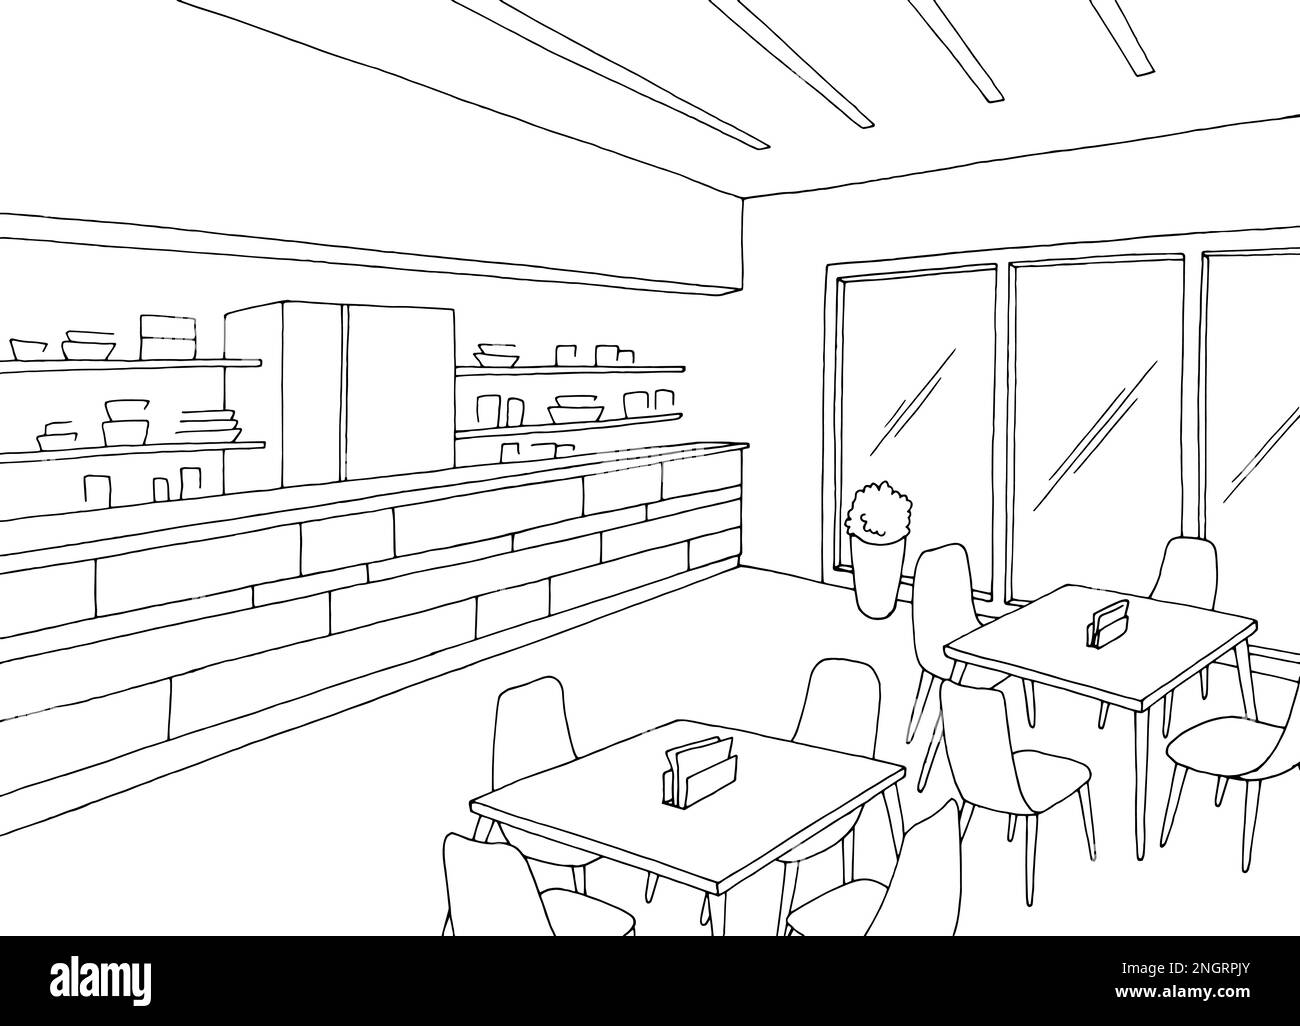 Café Innenraum Fast Food Court Grafik schwarz weiß Skizze Illustration Vektor Stock Vektor